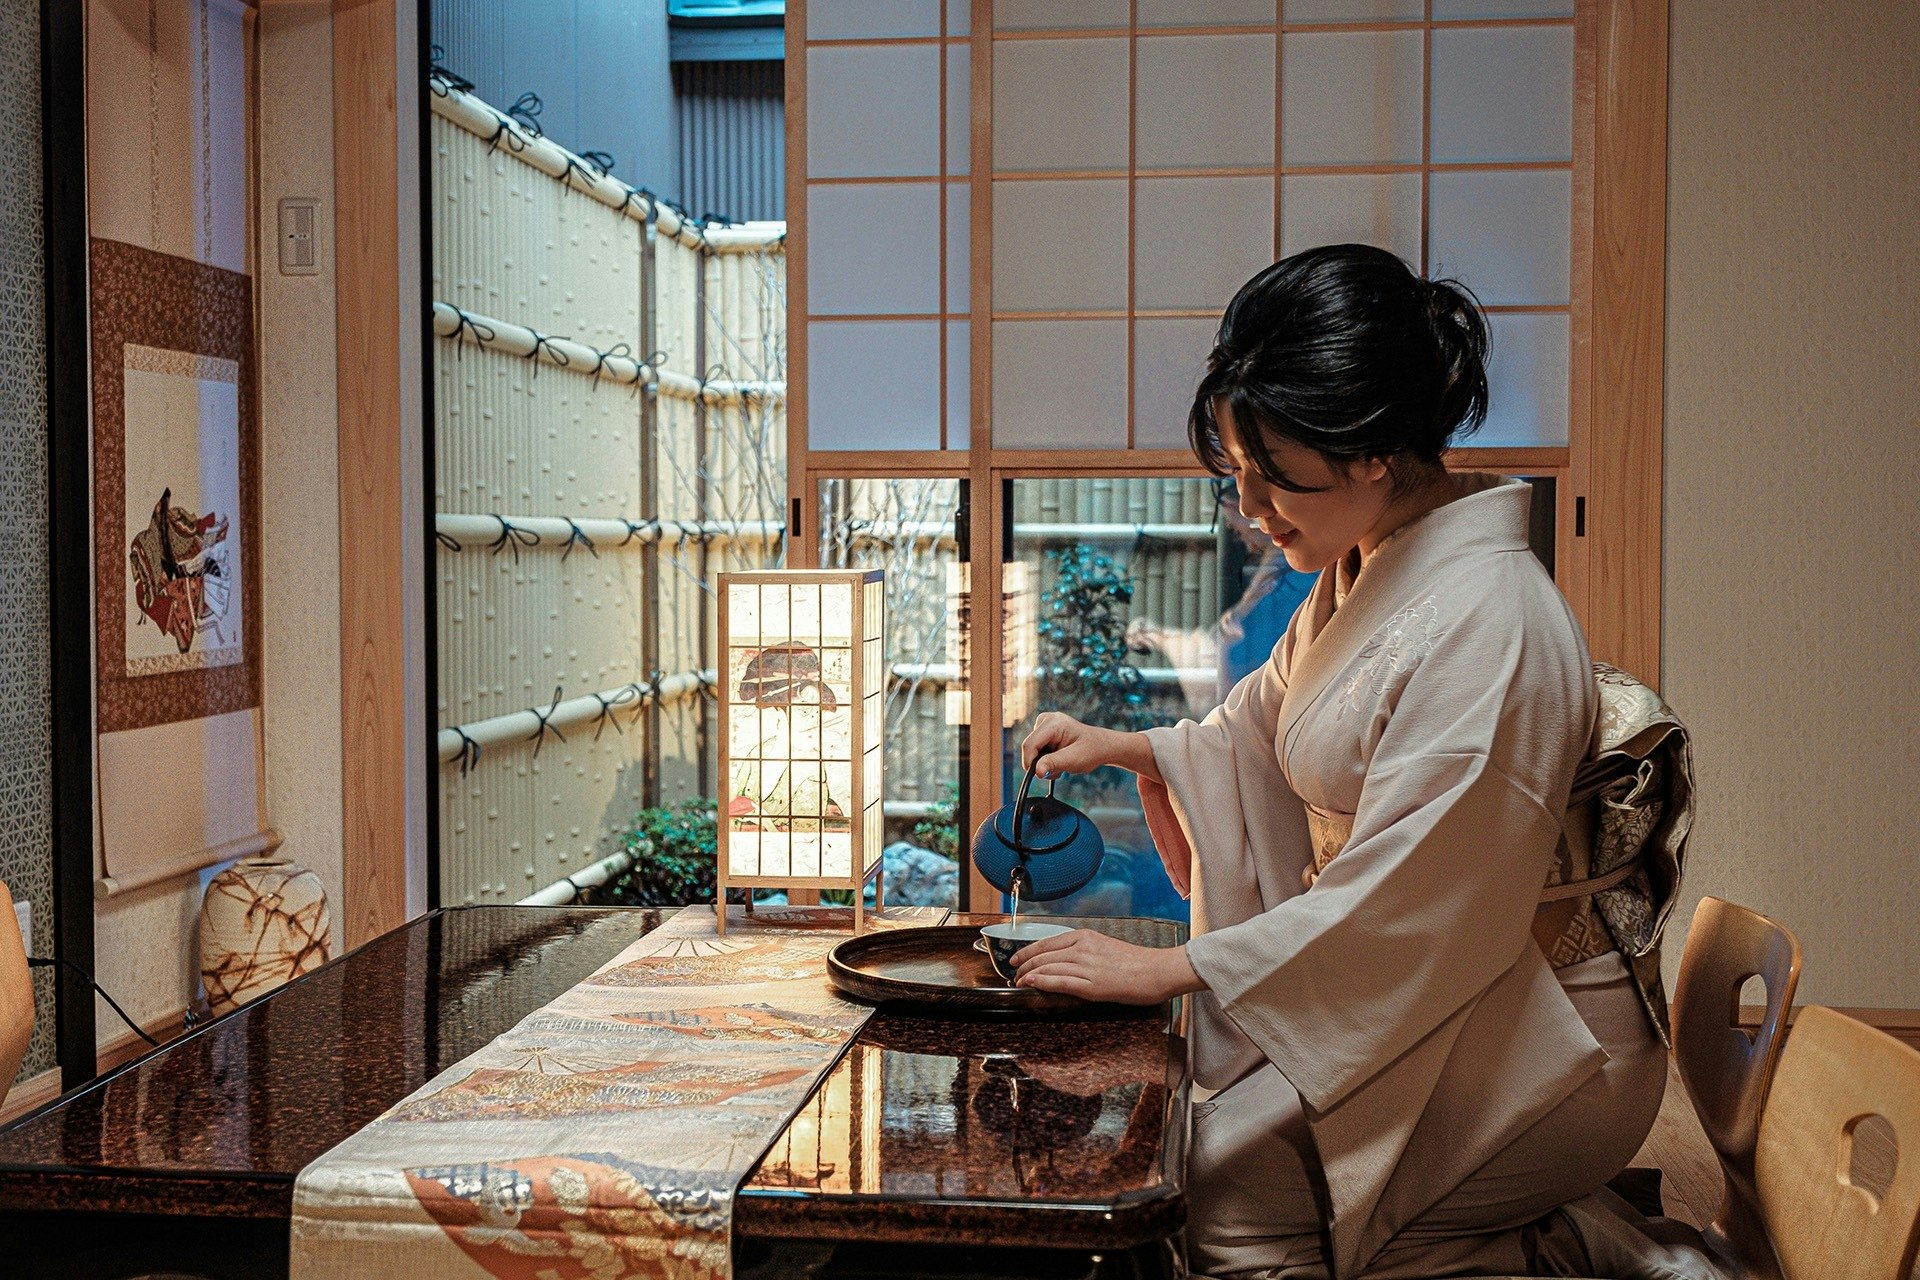 千代乃家は 明治40年の建物です 日本古建築文化京町屋風 